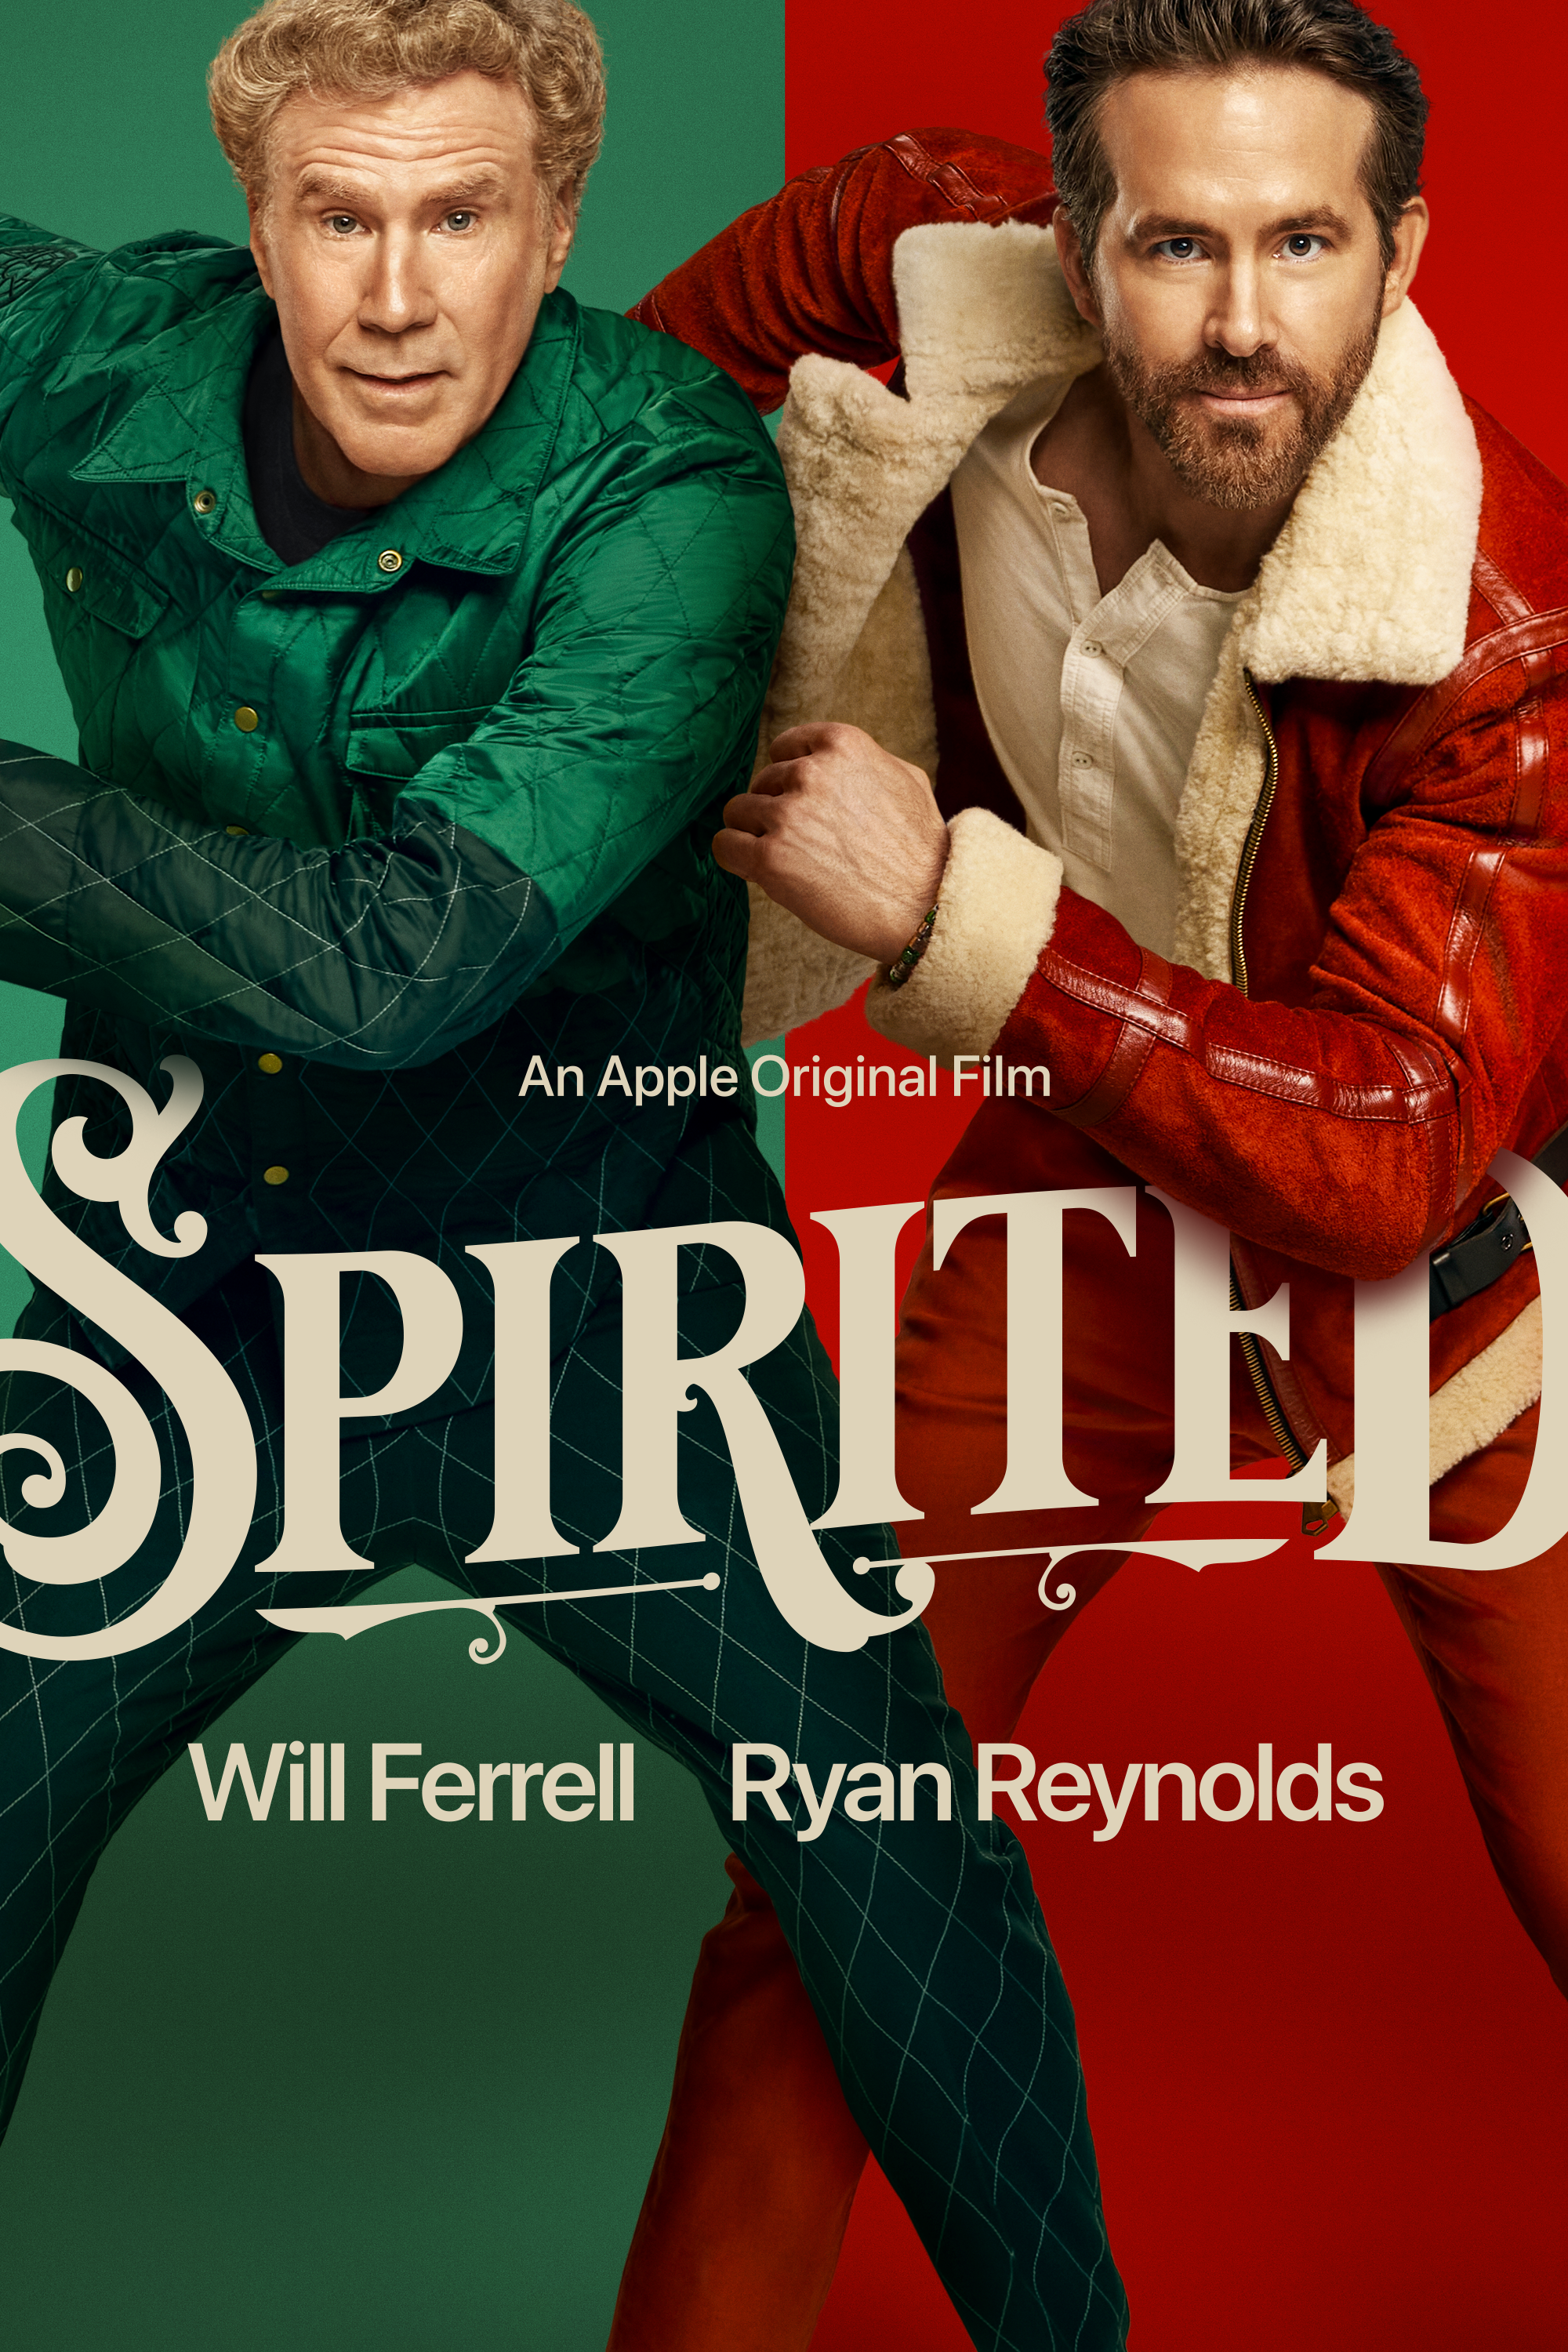 Ryan Reynolds' best and worst movies ranked - Spirited movie release |  Gallery 